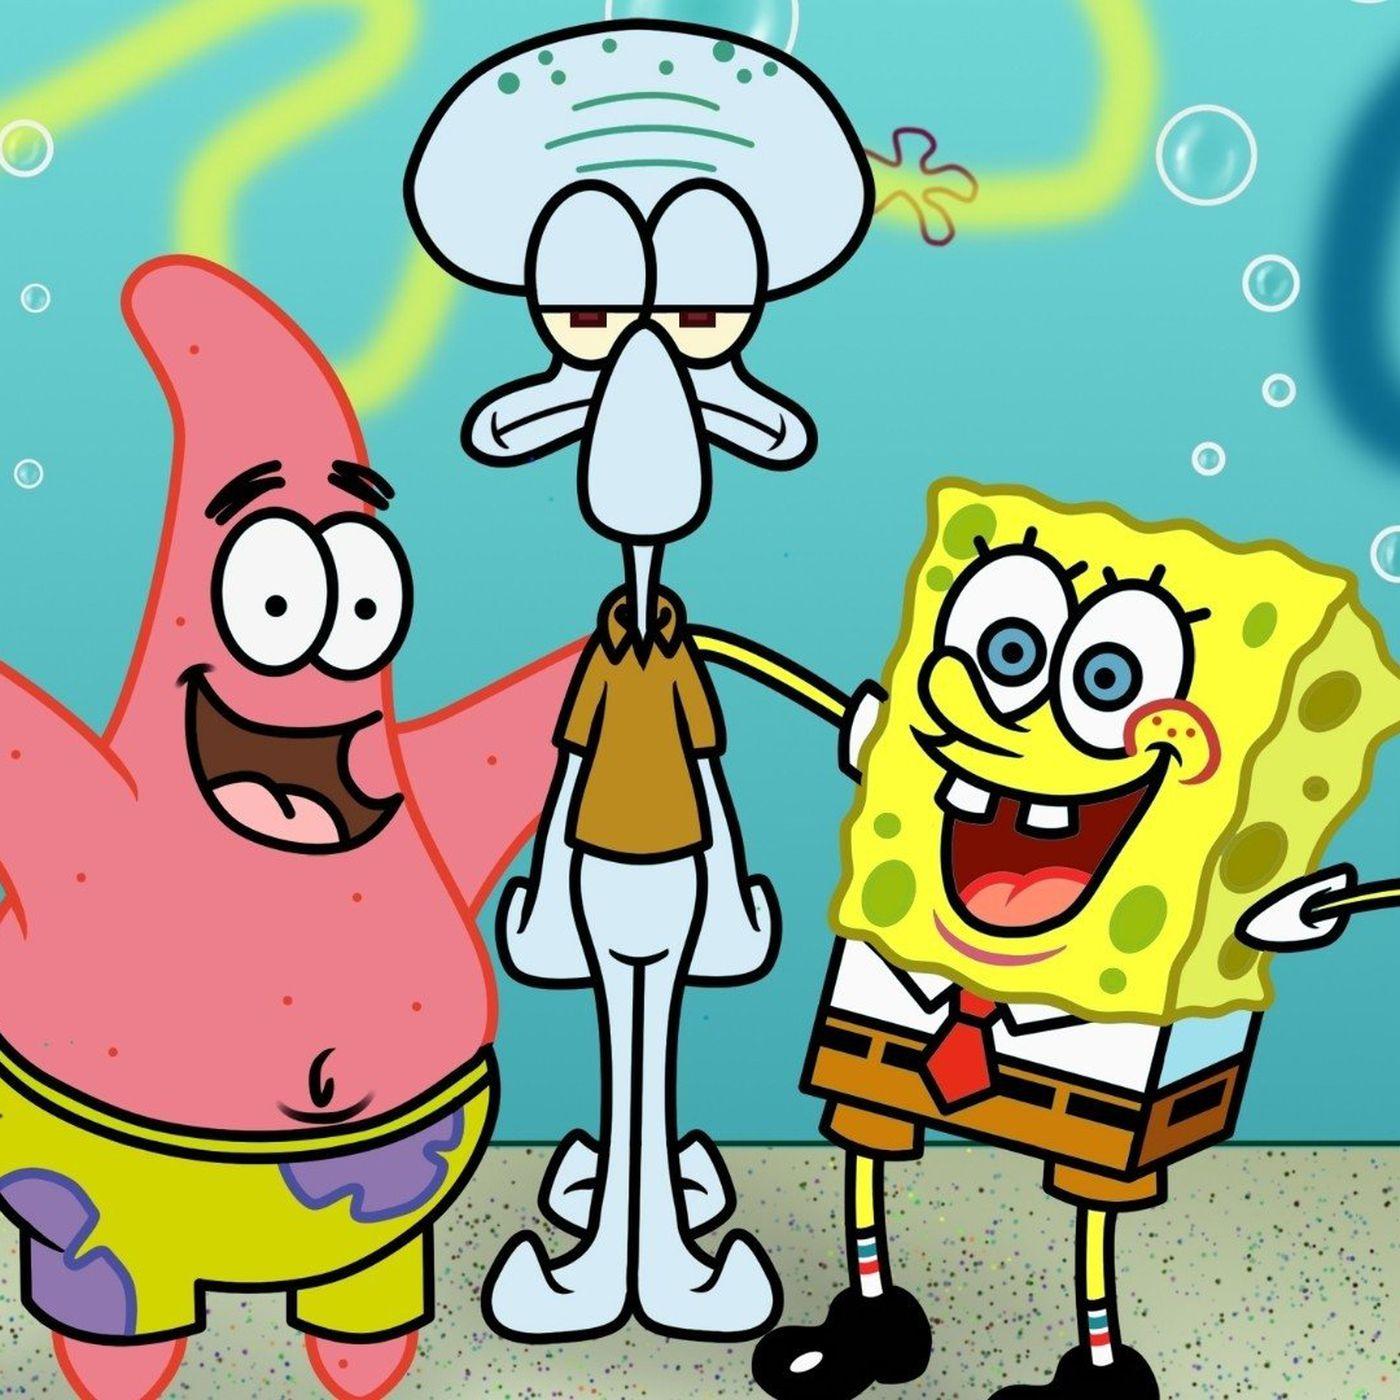 Spongebob memes: Mocking Spongebob, Caveman Spongebob, and more rule internet culture